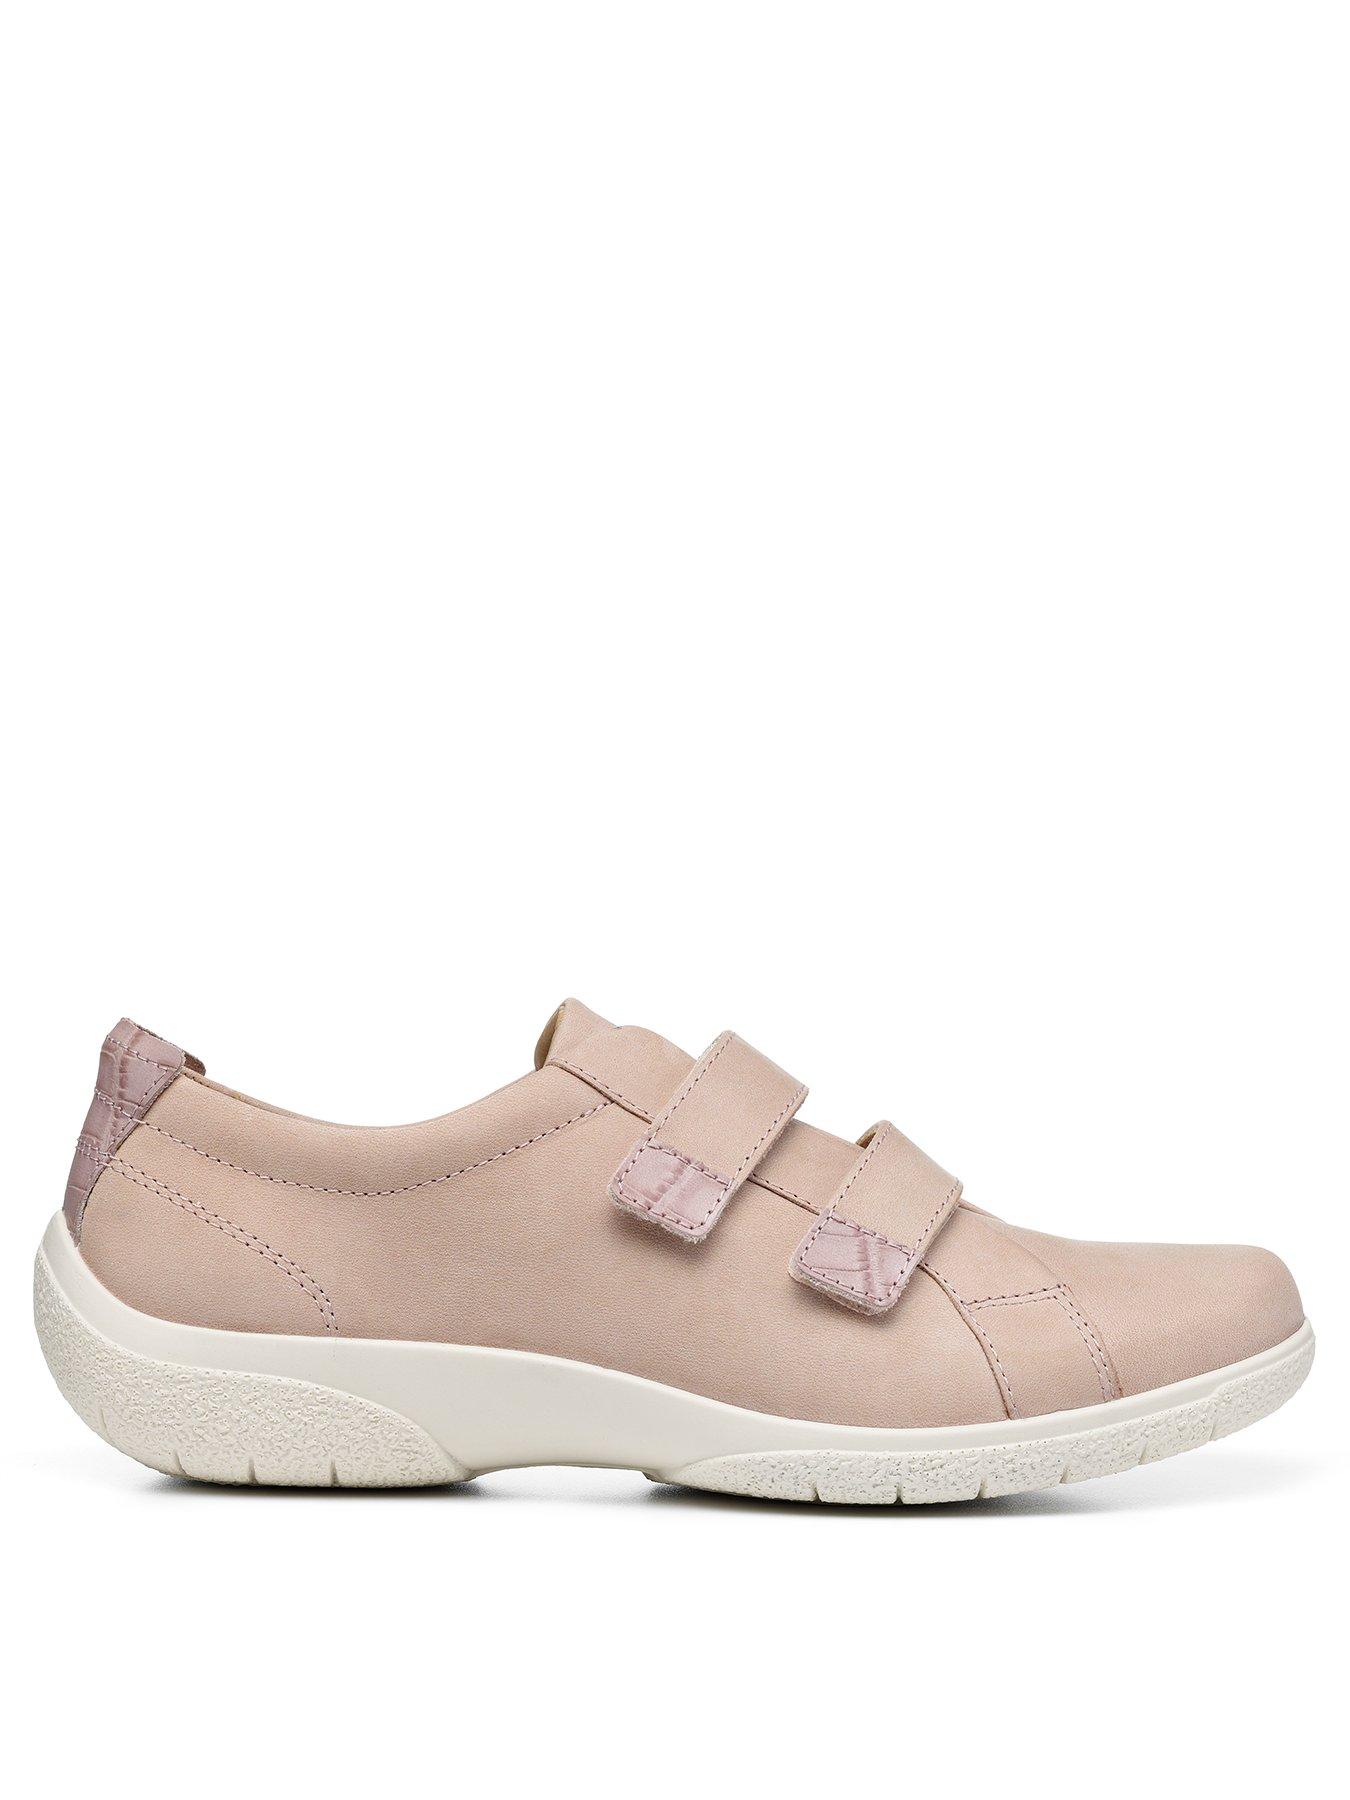  Leap Flat Shoes - Pink